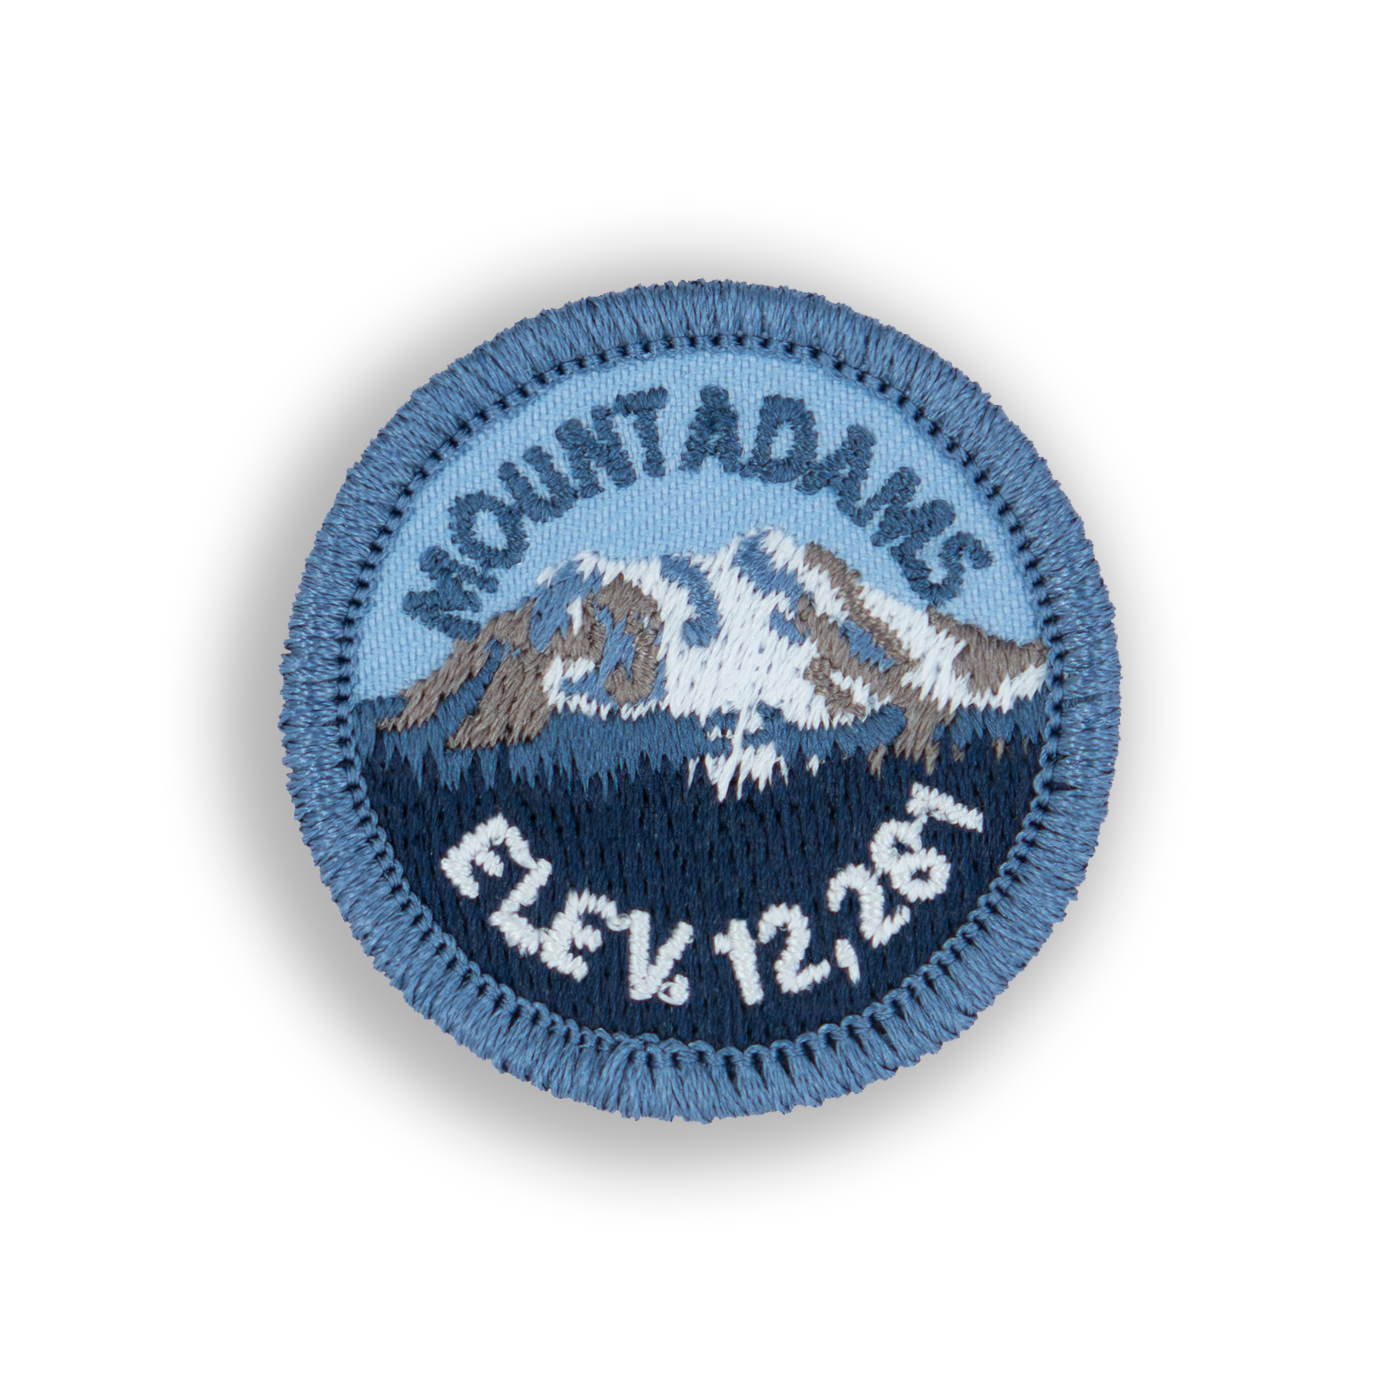 Mount Adams Patch | Demerit Wear - Fake Merit Badges